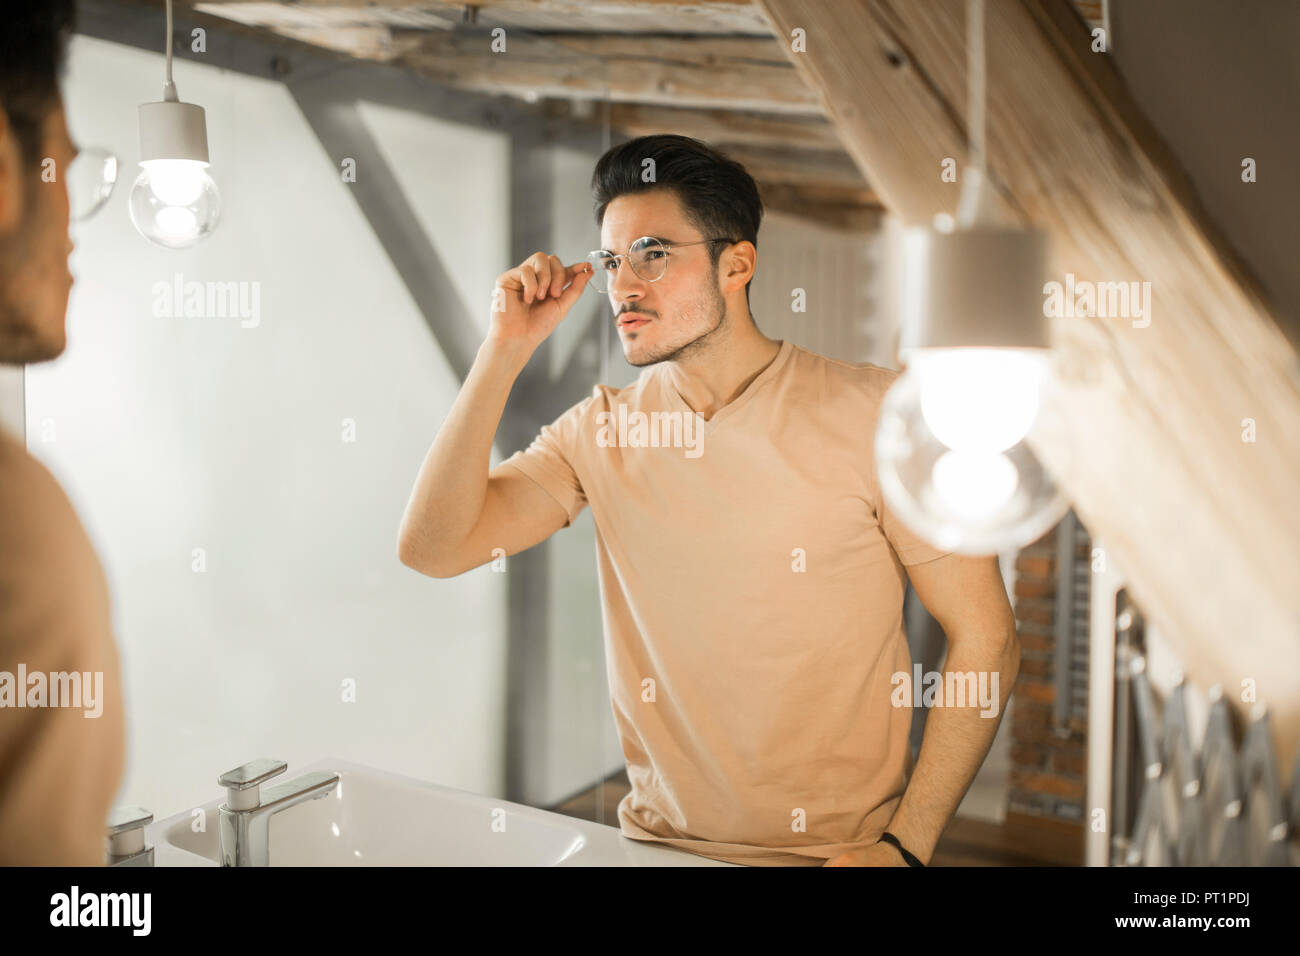 Young man looking in bathroom mirror Stock Photo